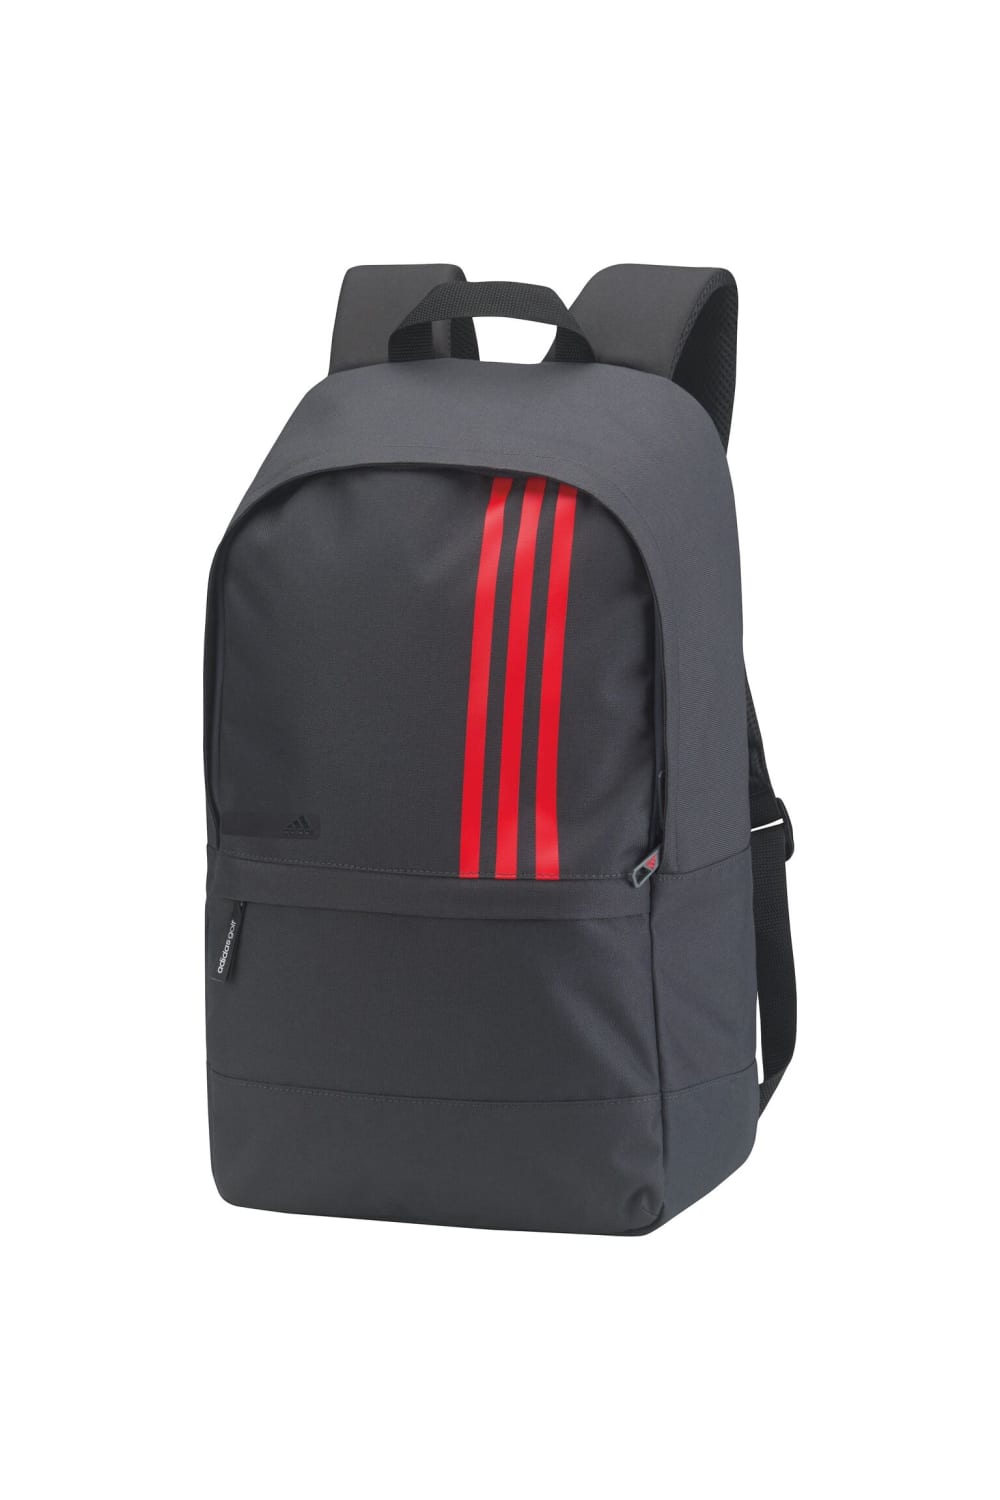 3 Stripes Small Backpack - Dark Grey/Scarlet